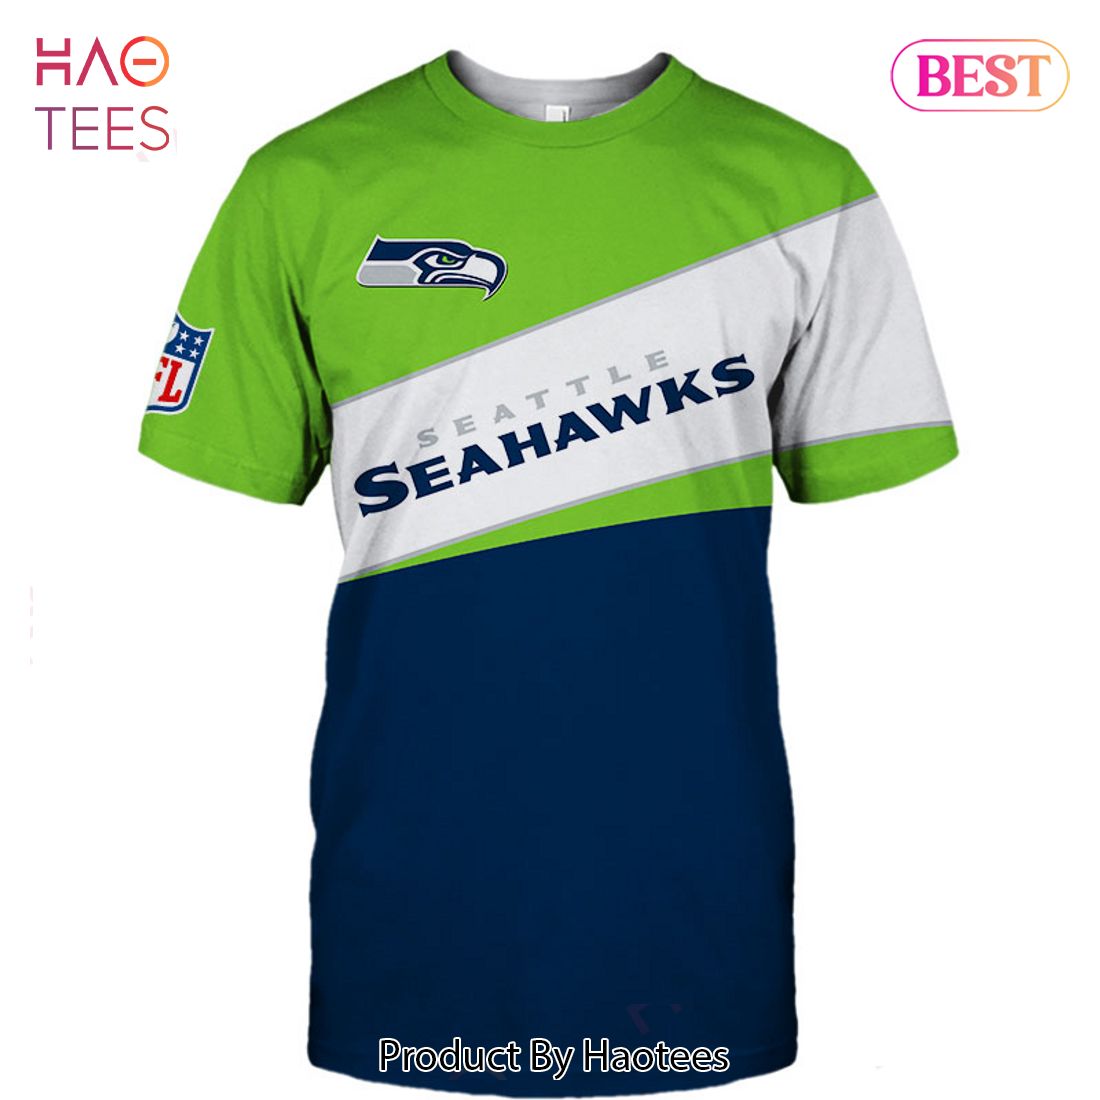 seahawks football shirt